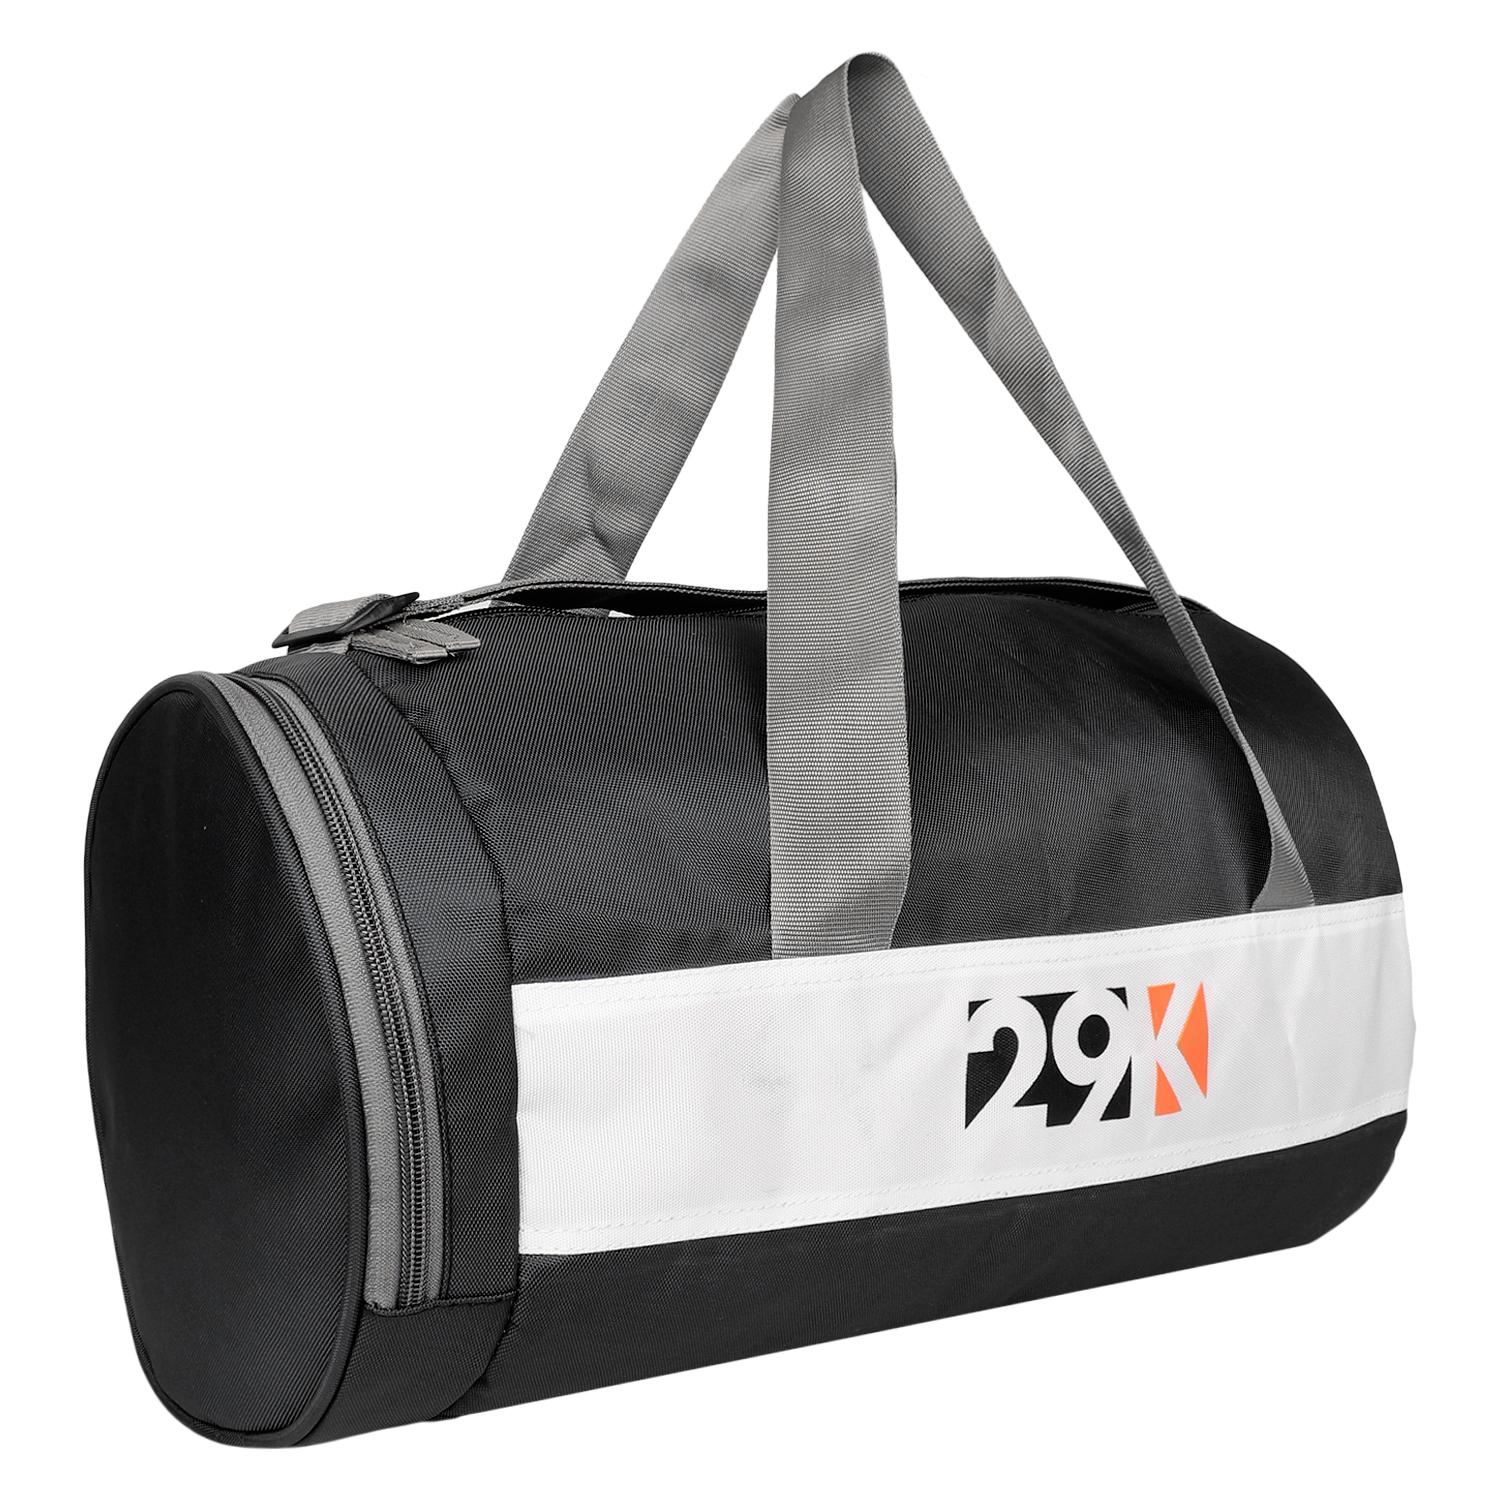 Buy 29K Black Sporty Gym Bag Online @ ₹1299 from ShopClues